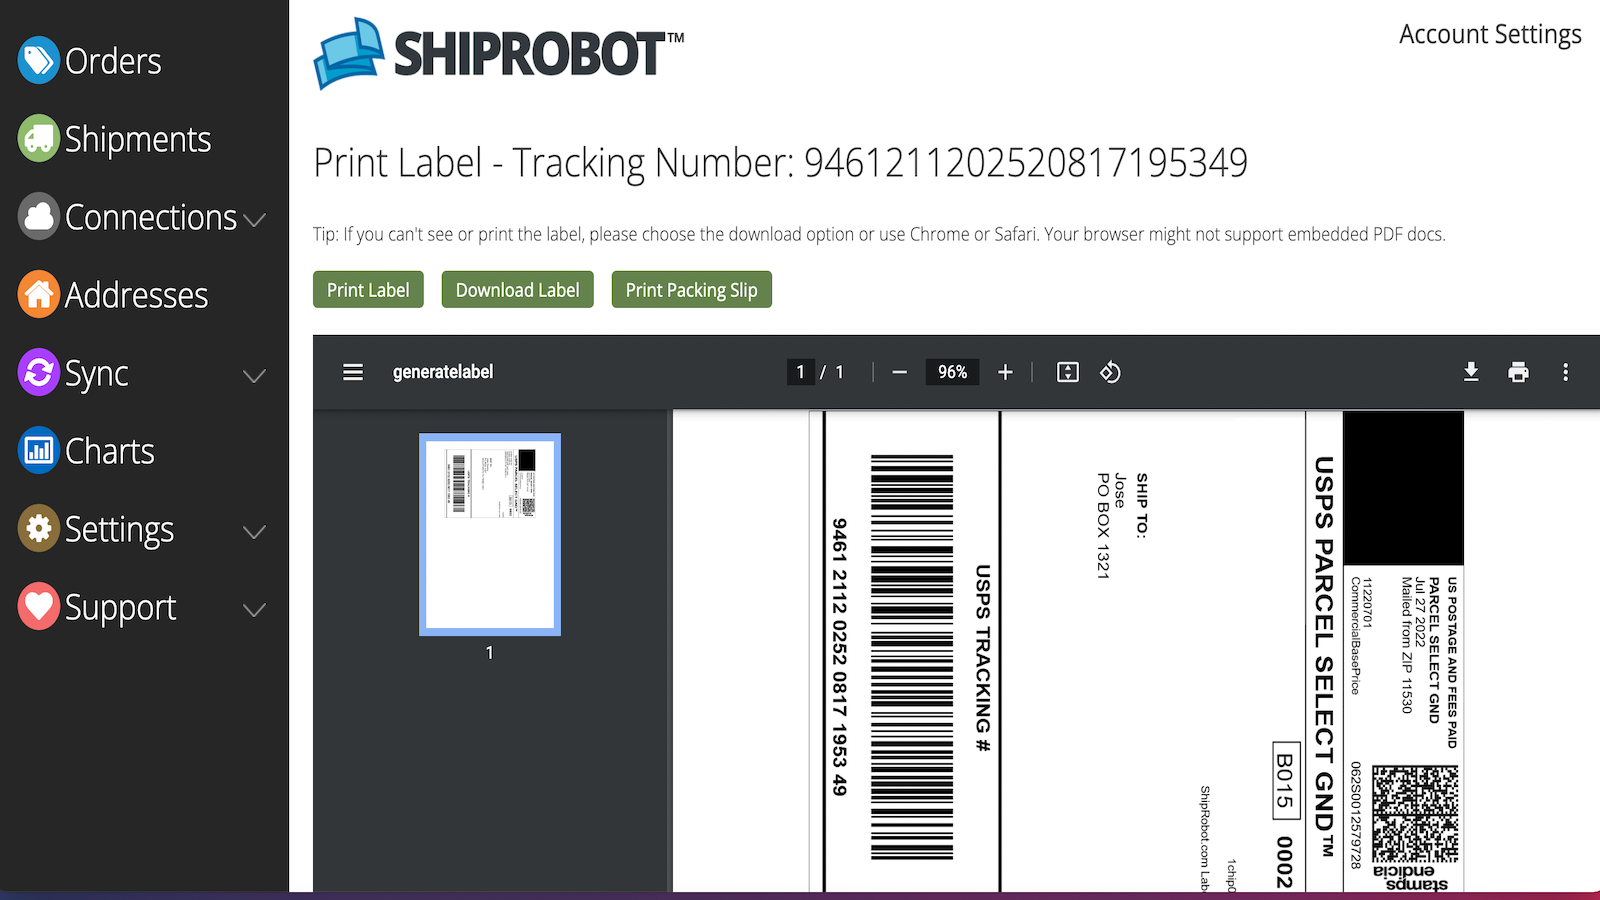 Print Shipping Label